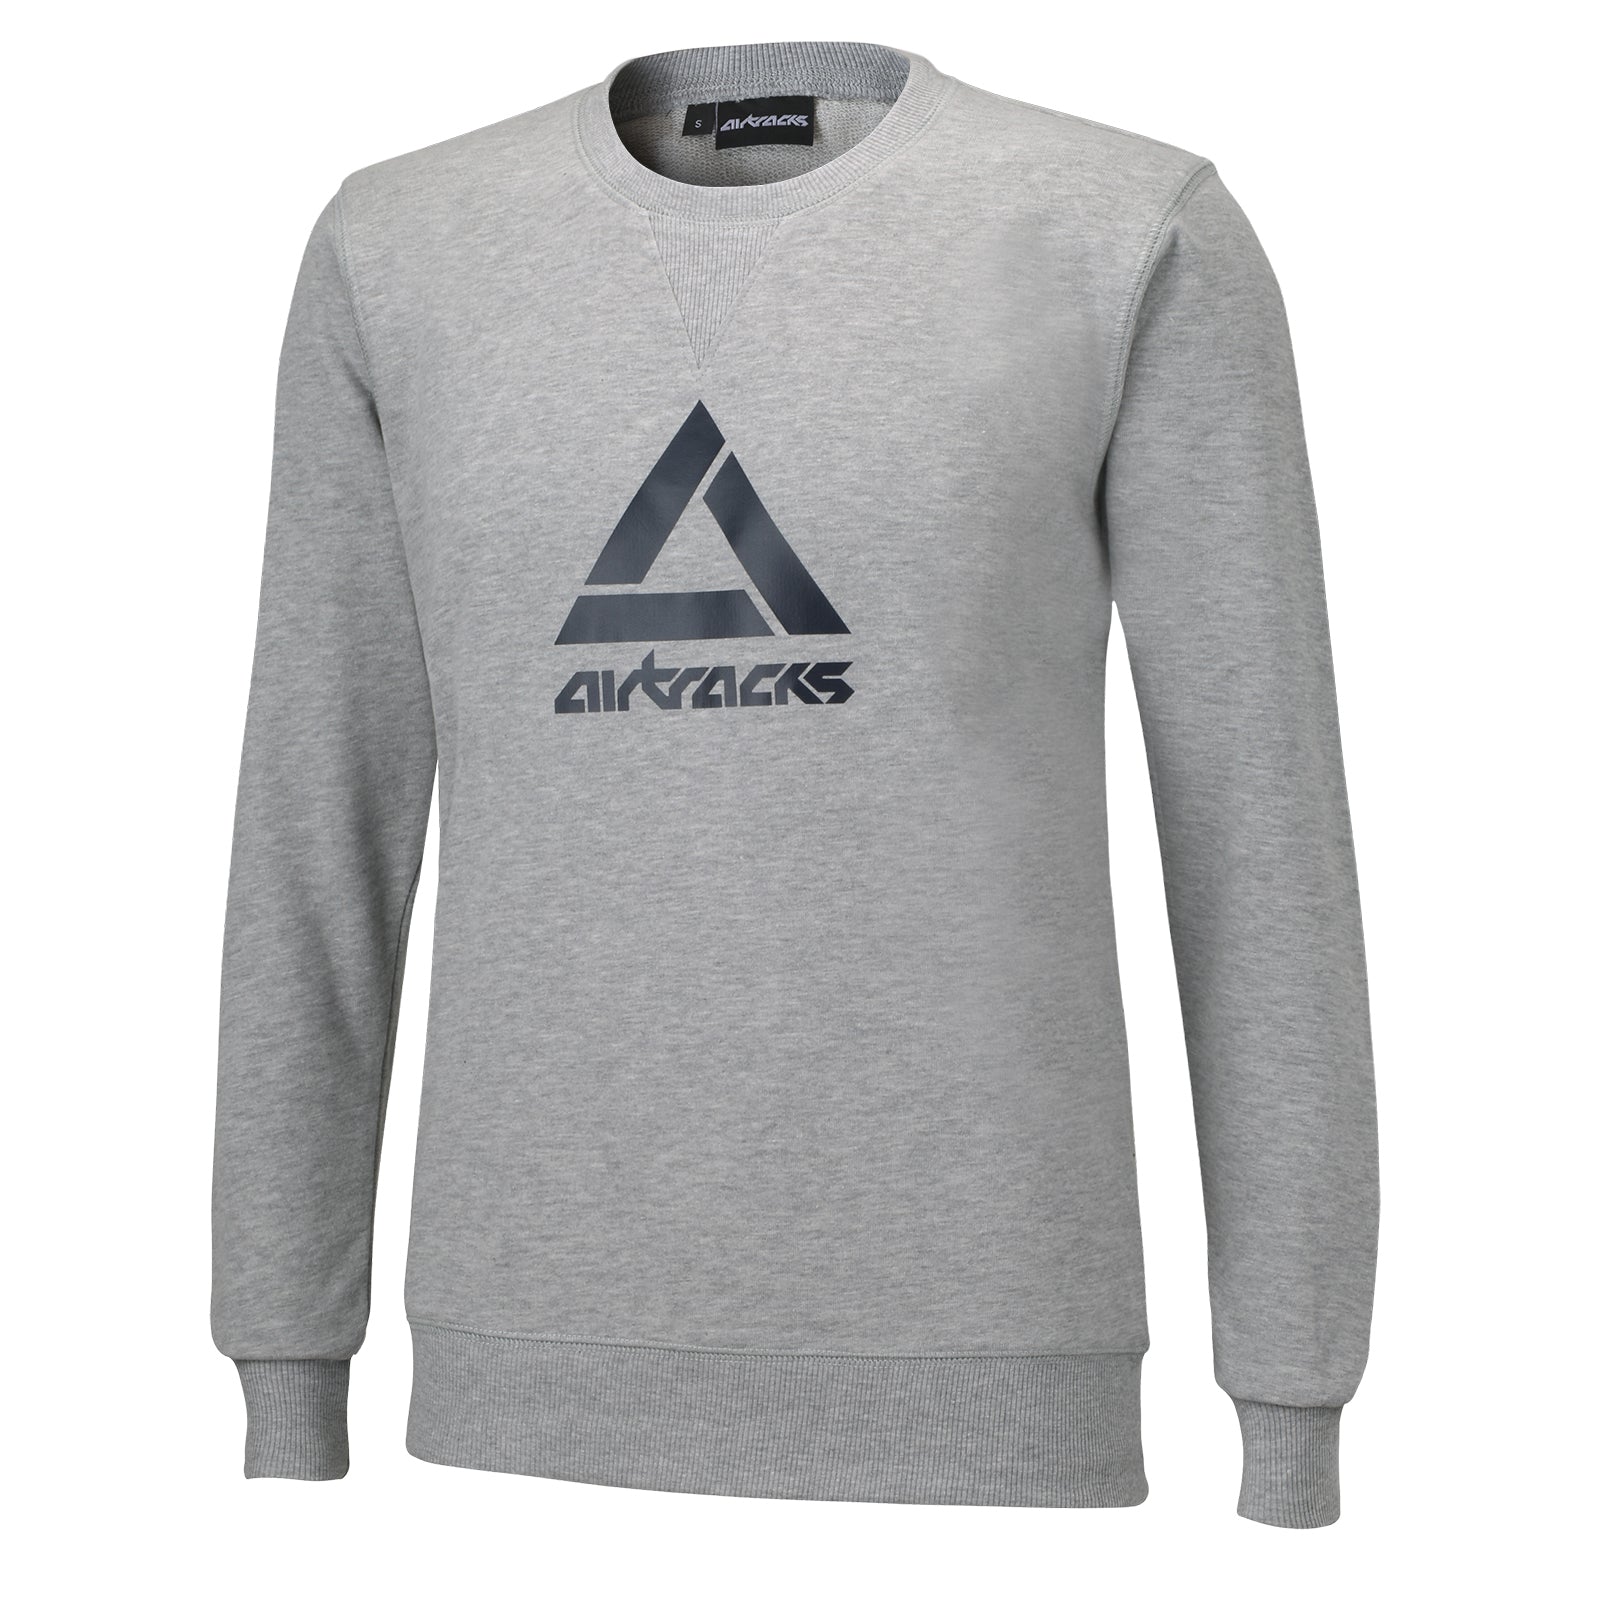 Sweatshirt-ohne-kapuze-winter-thermo-pro-hoodie-sweater-s-m-l-xl-xxl-melange-logo-print